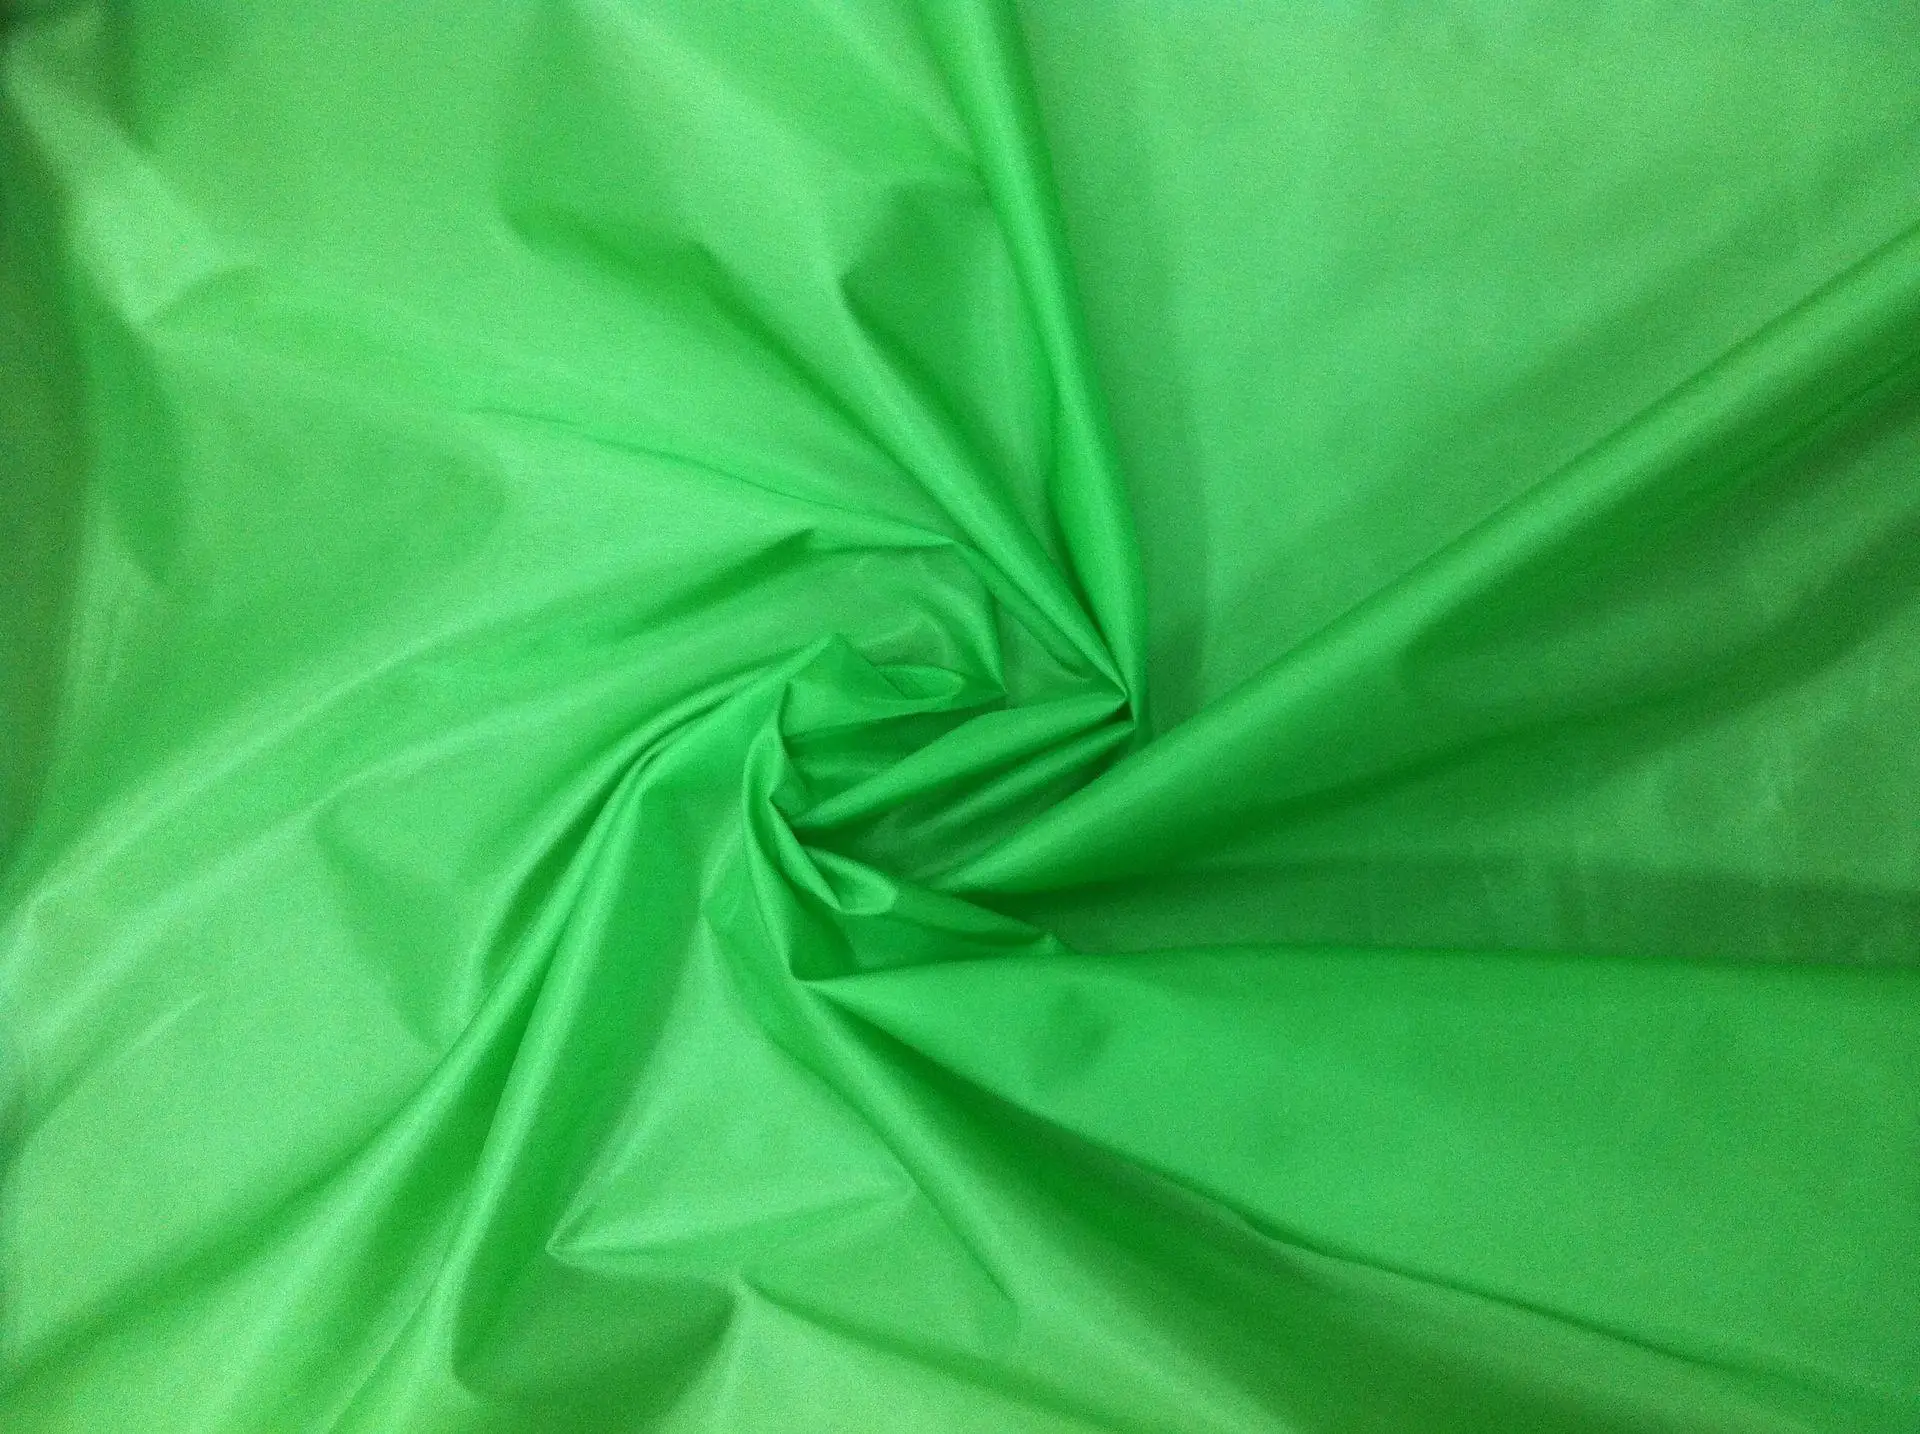 Soft Shell dull finish Downproof 100%Nylon 380T Taffeta cire coating fabric for jacket